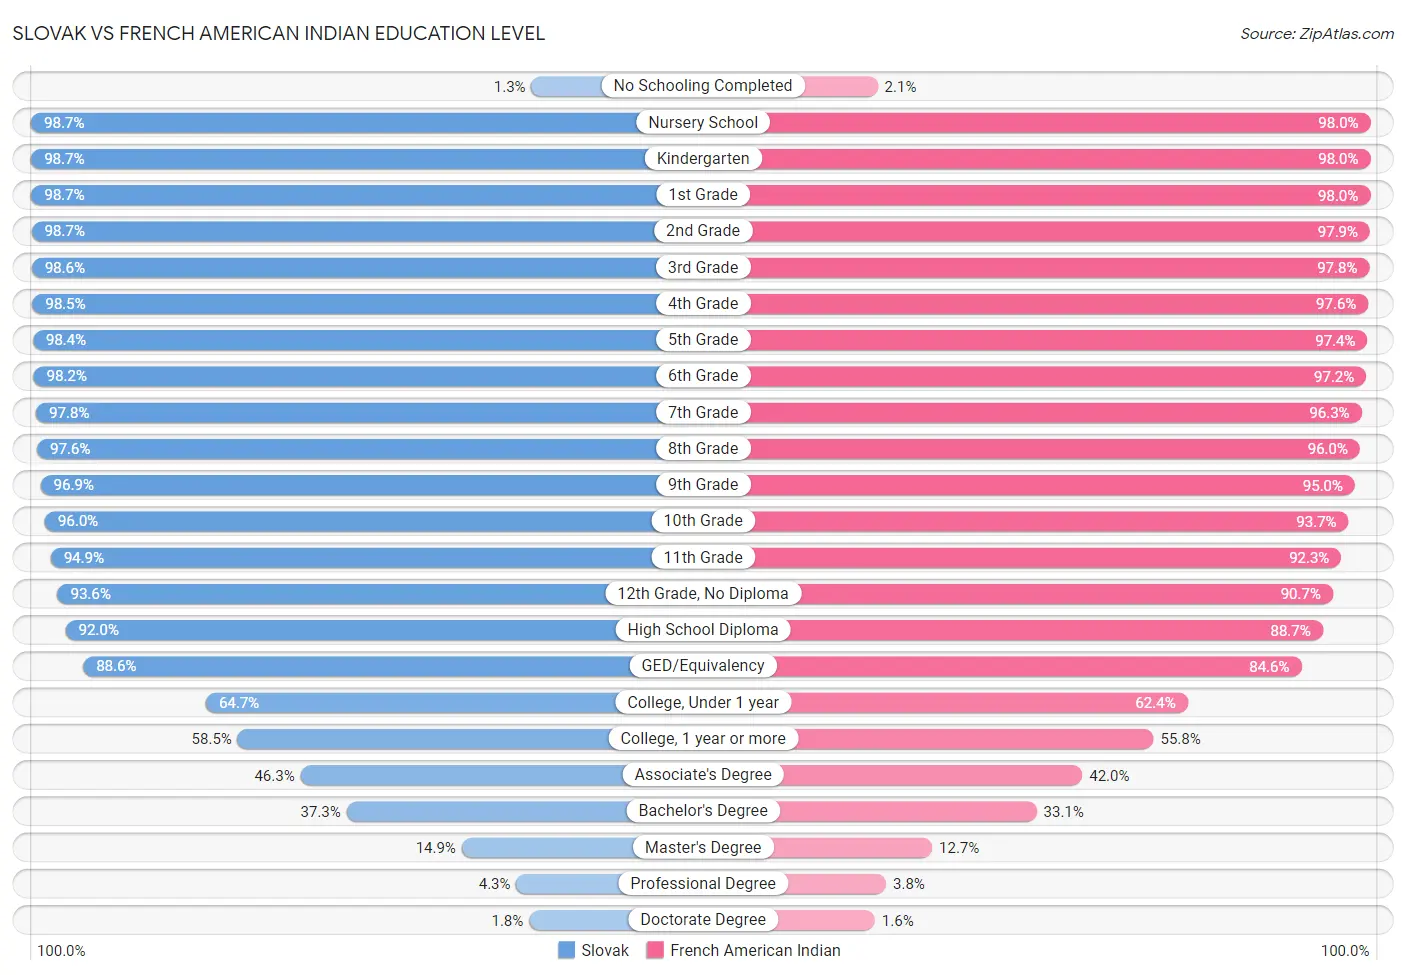 Slovak vs French American Indian Education Level